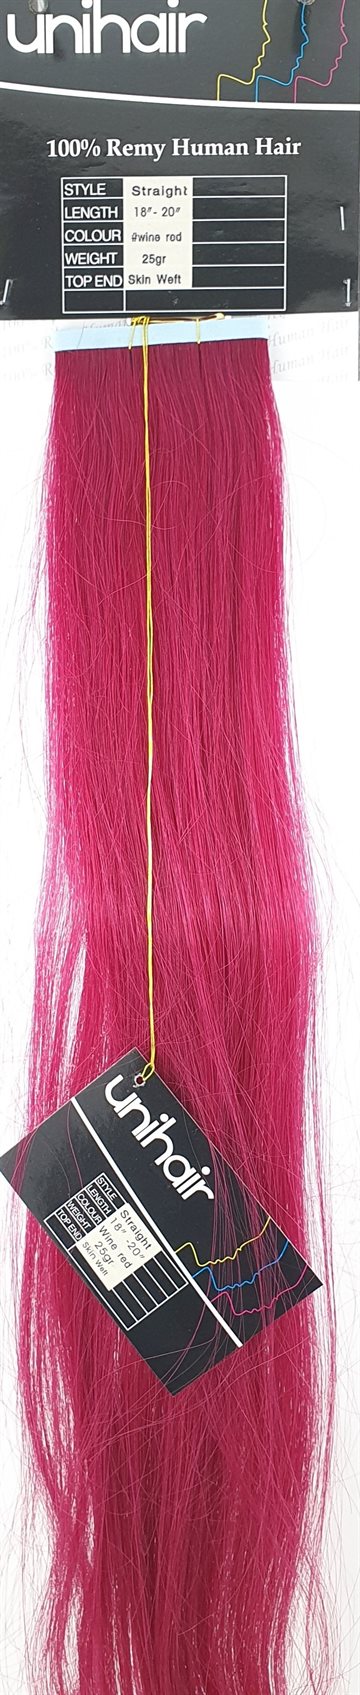 American Dream Human Hair - Skin Weft hair, color Wine Red- 18" (45 cm. length.)